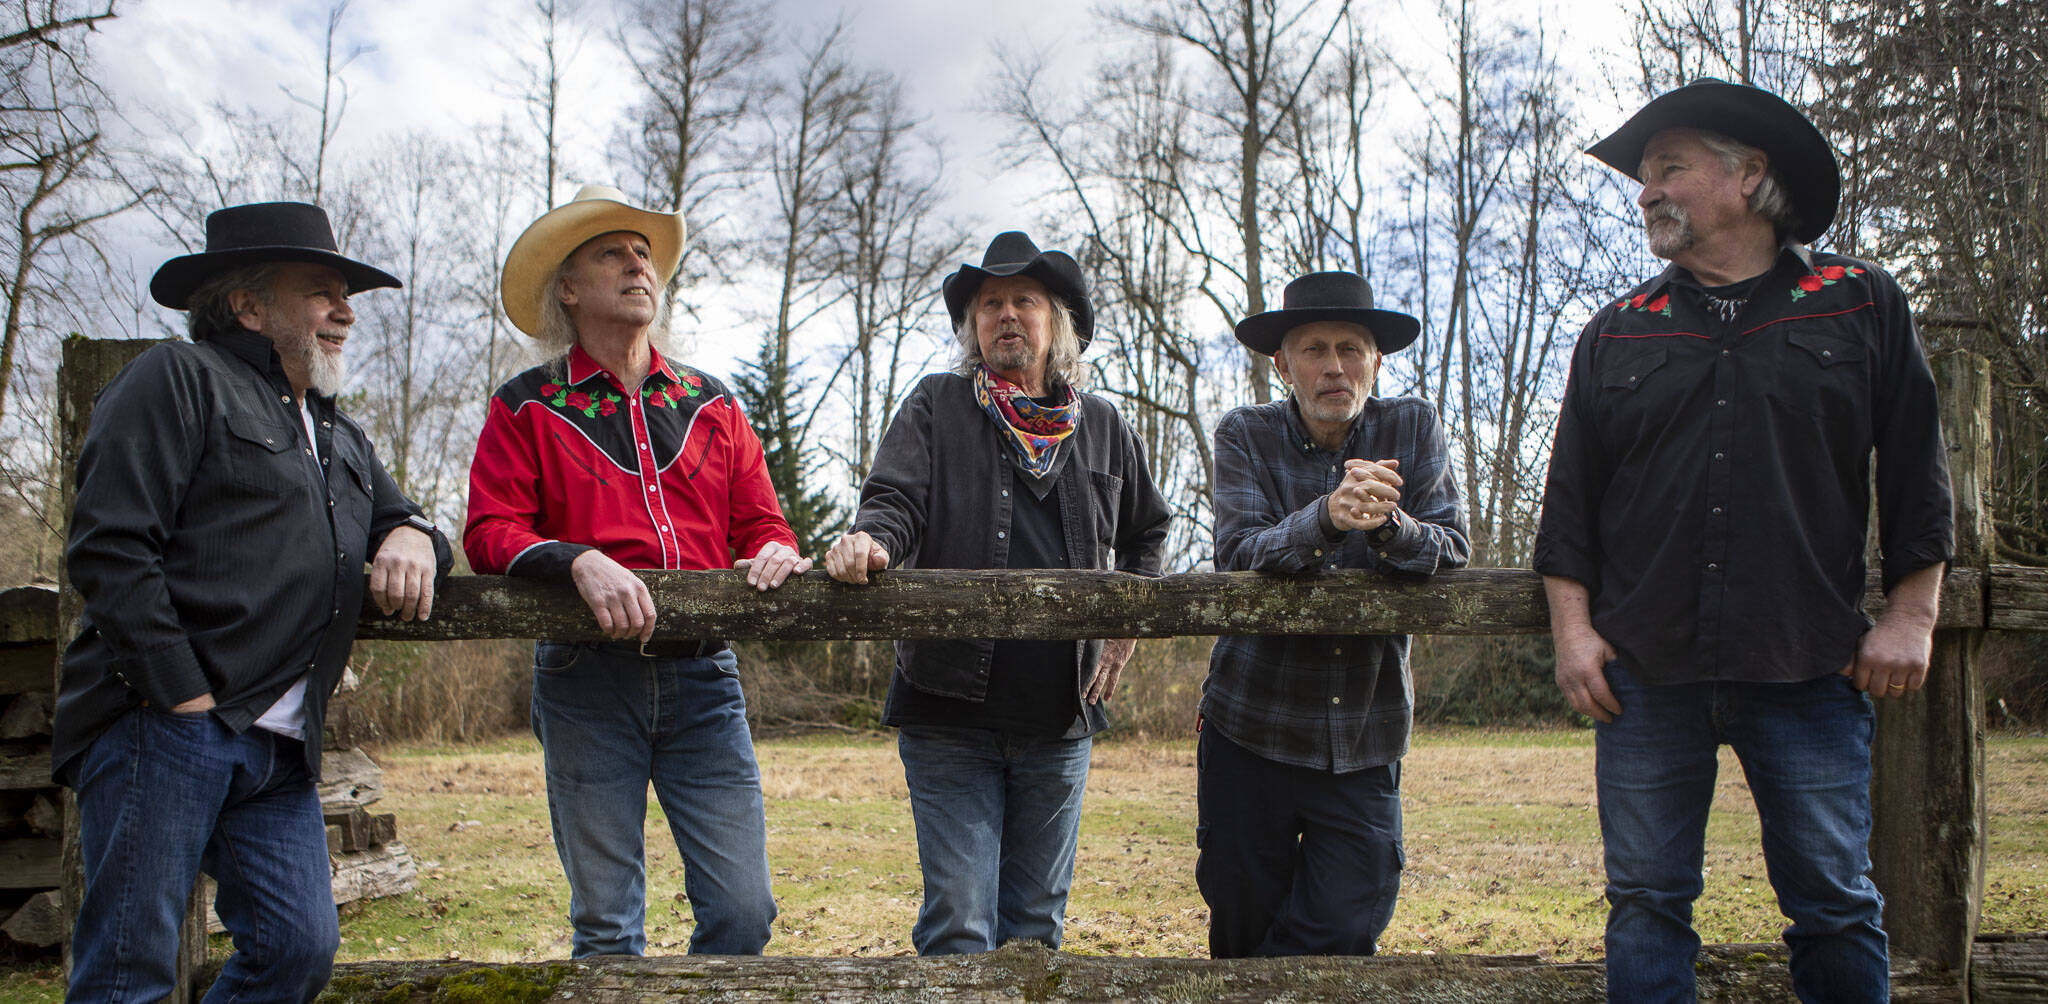 Bliver værre ressource plads Dan Canyon Band brings a taste of cowboy life to Snohomish County |  HeraldNet.com